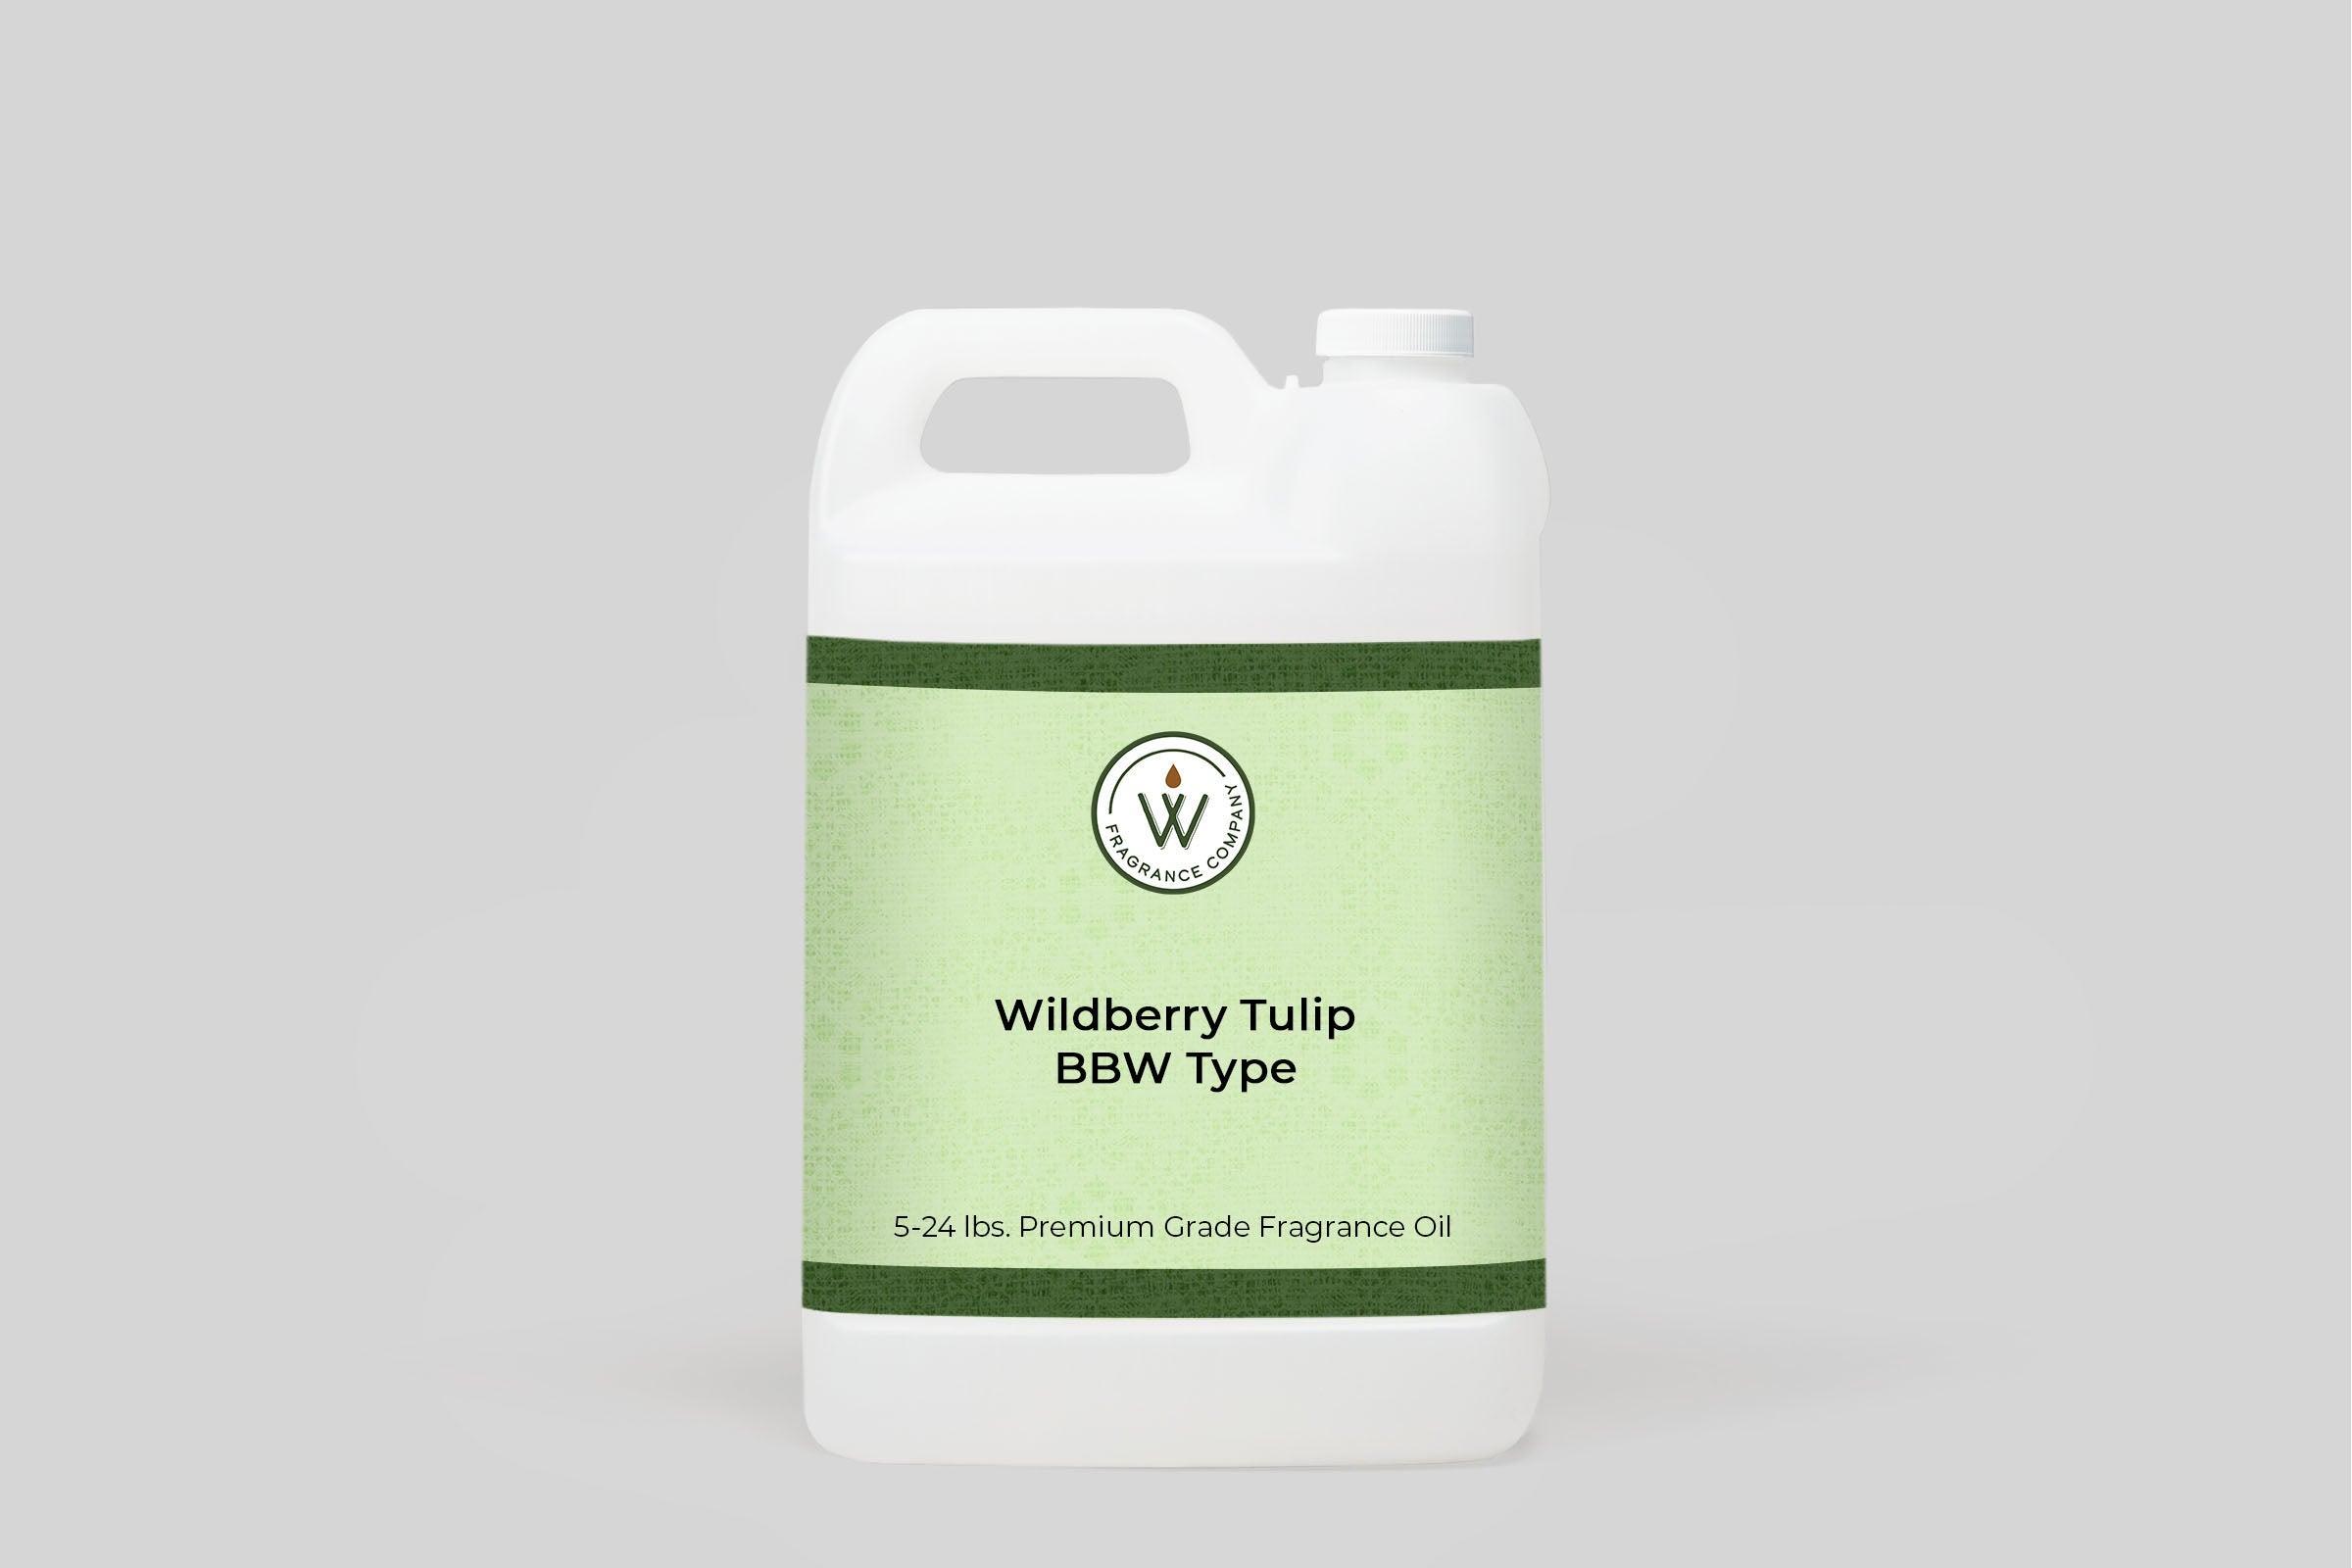 Wildberry Tulip BBW Type Fragrance Oil